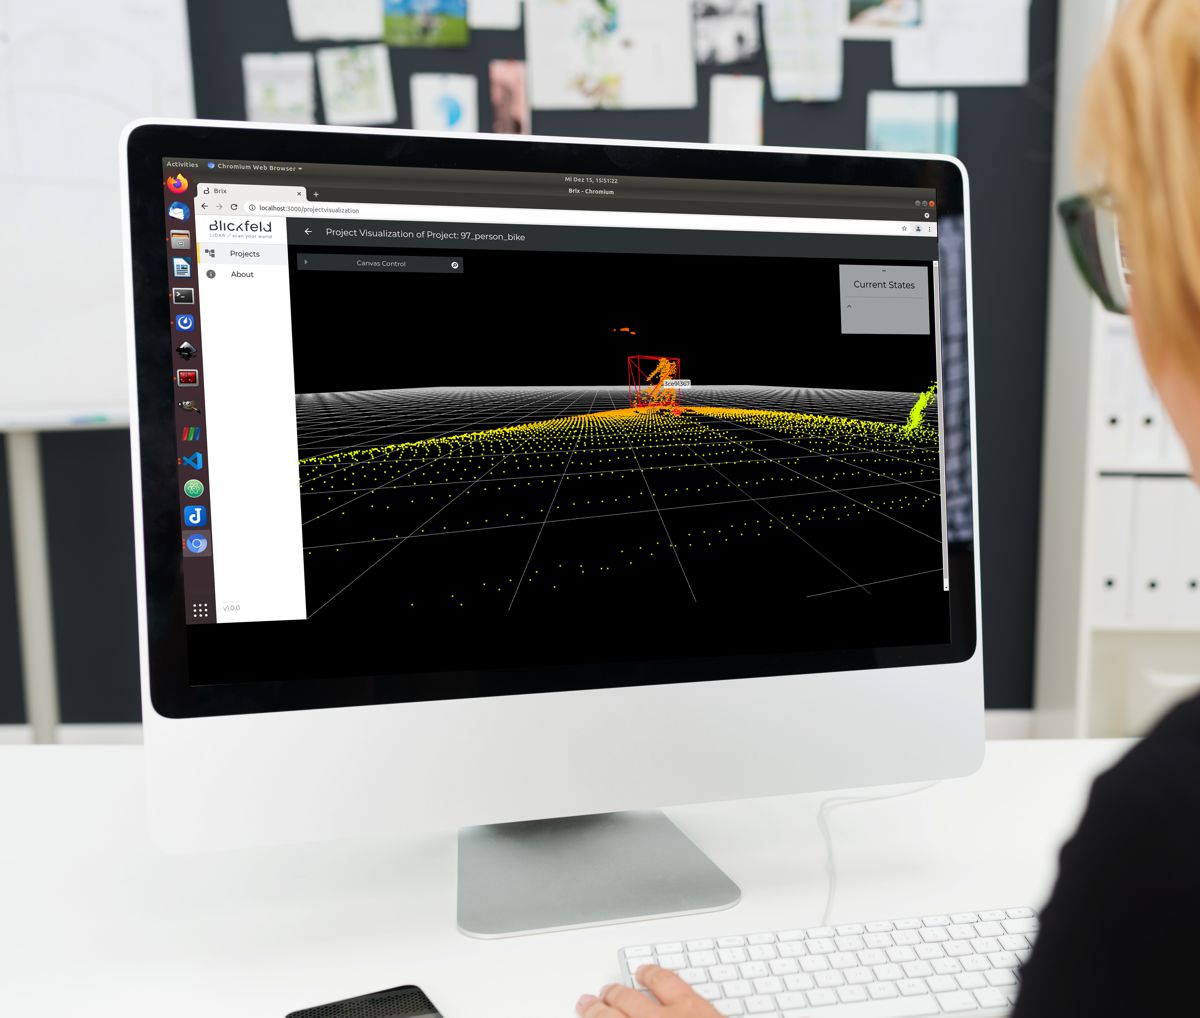 Blickfeld announces Smart 3D LiDAR with launch of Percept software